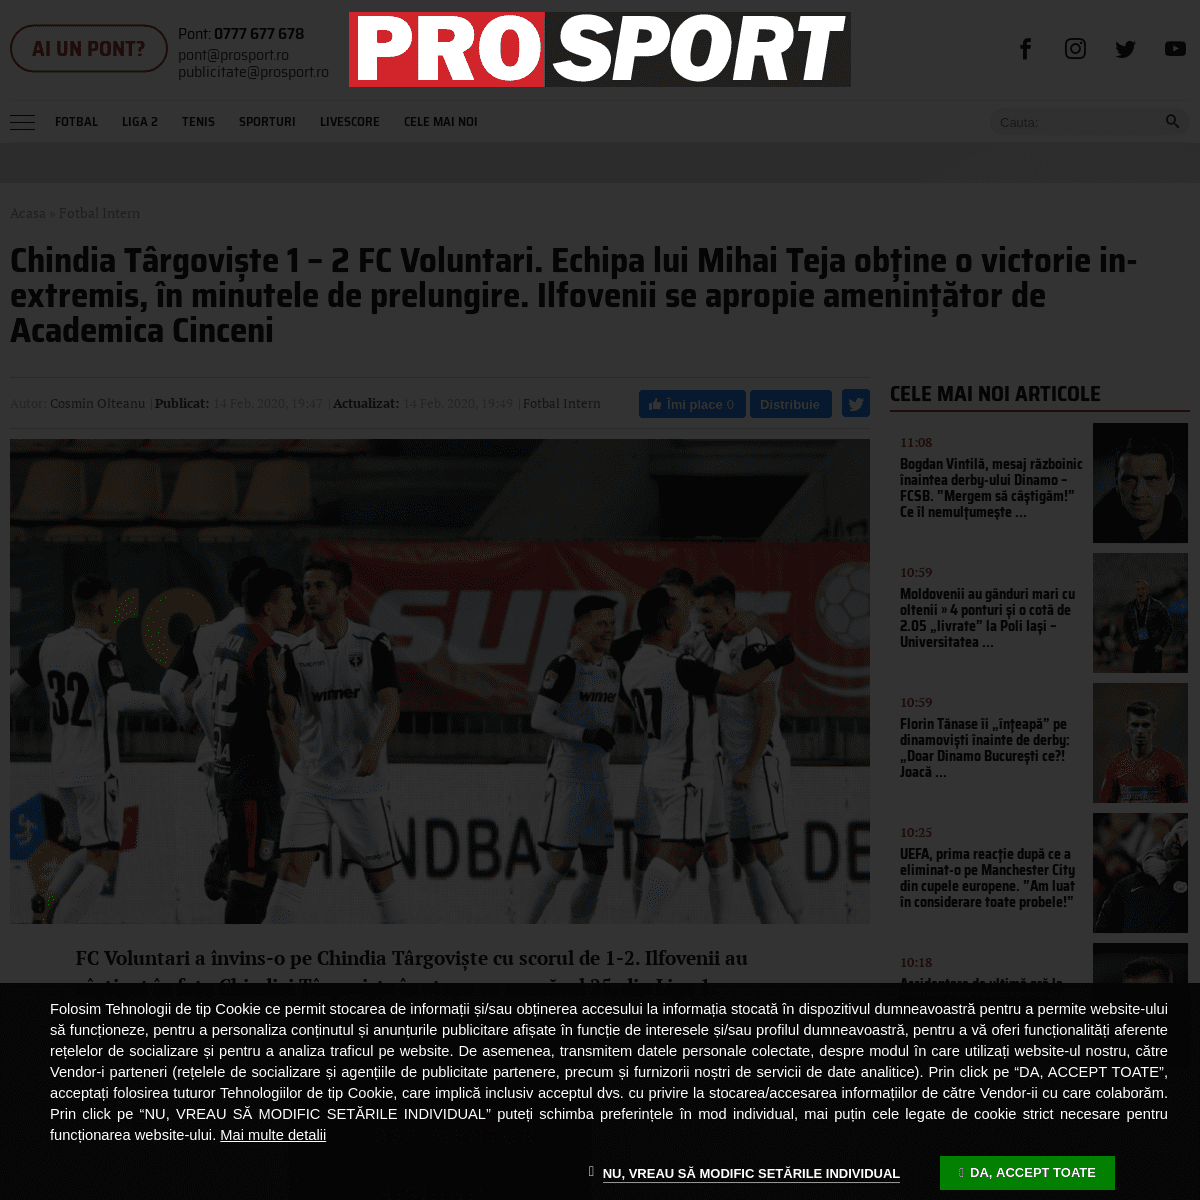 A complete backup of www.prosport.ro/fotbal-intern/live-text-chindia-targoviste-fc-voluntari-ilfovenii-se-lupta-pentru-a-scapa-d